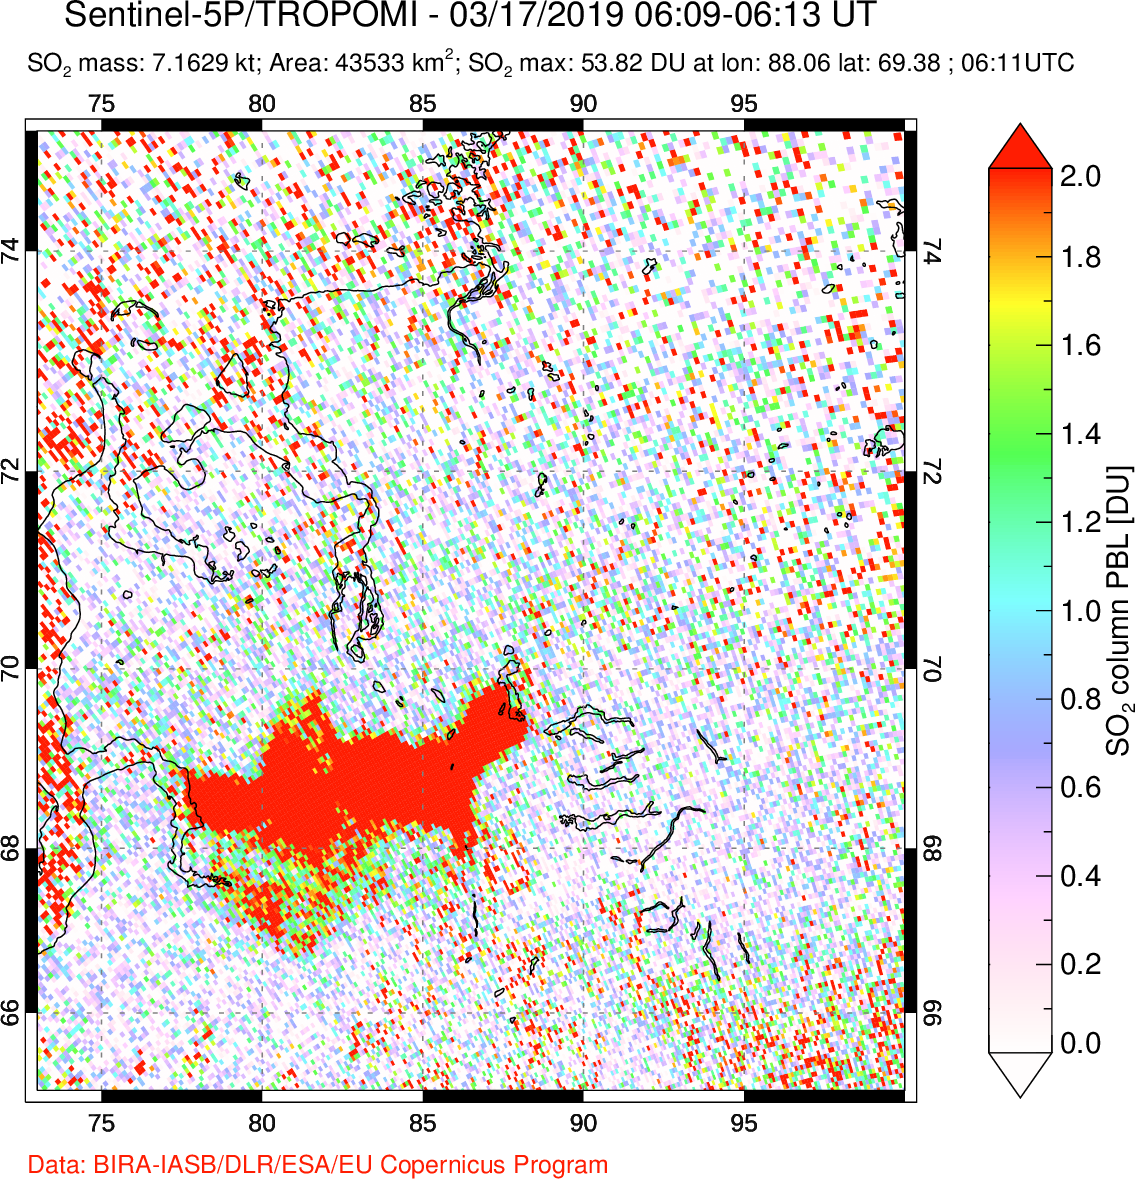 A sulfur dioxide image over Norilsk, Russian Federation on Mar 17, 2019.